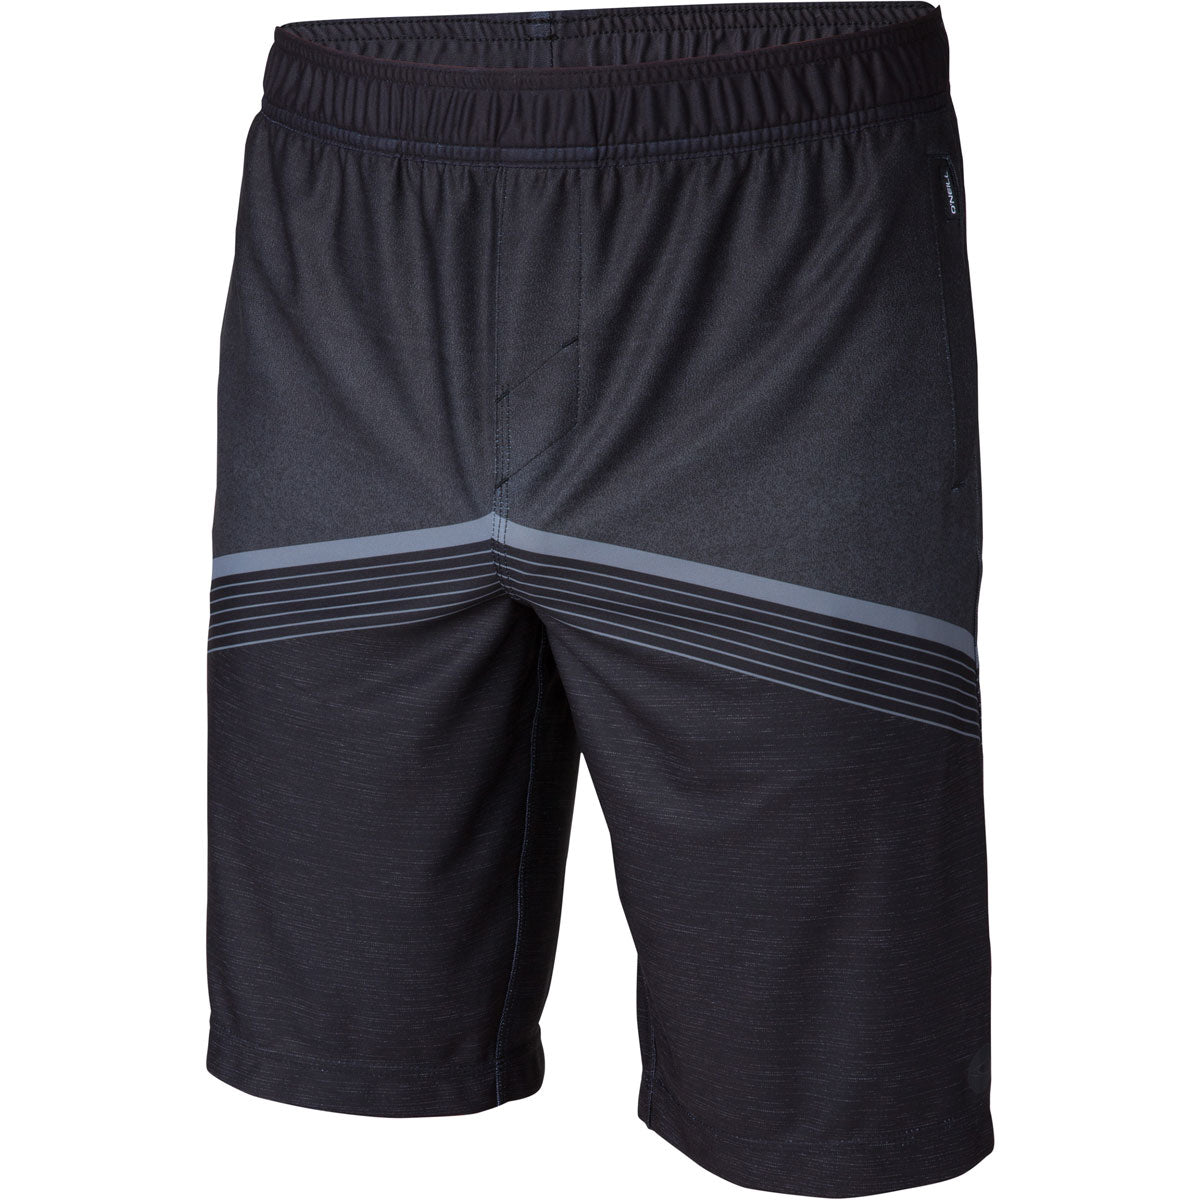 O'Neill State Athletic Men's Walkshort Shorts - Black